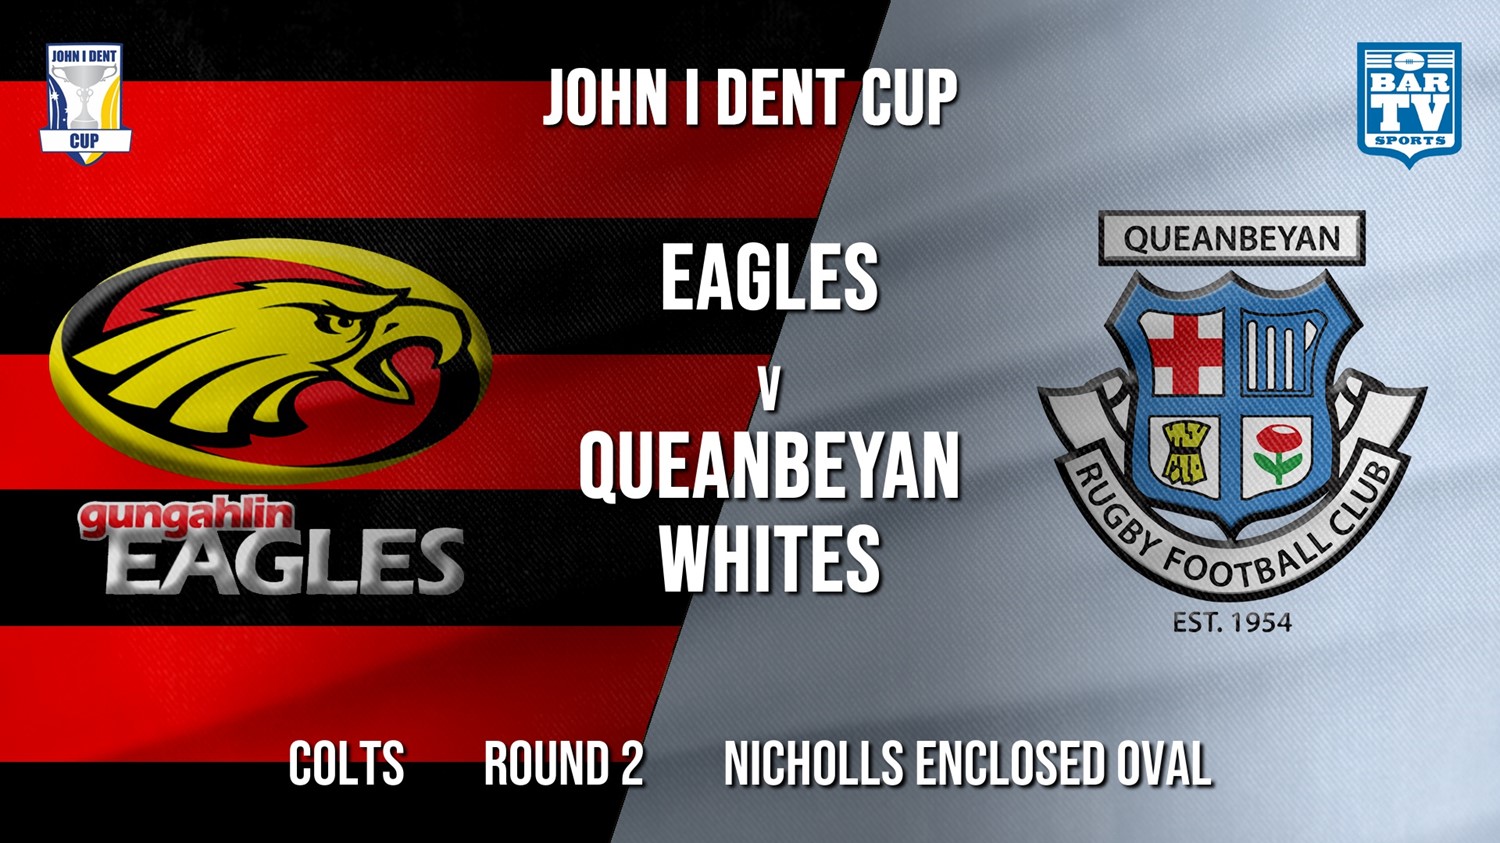 John I Dent Round 2 - Colts - Gungahlin Eagles v Queanbeyan Whites Minigame Slate Image